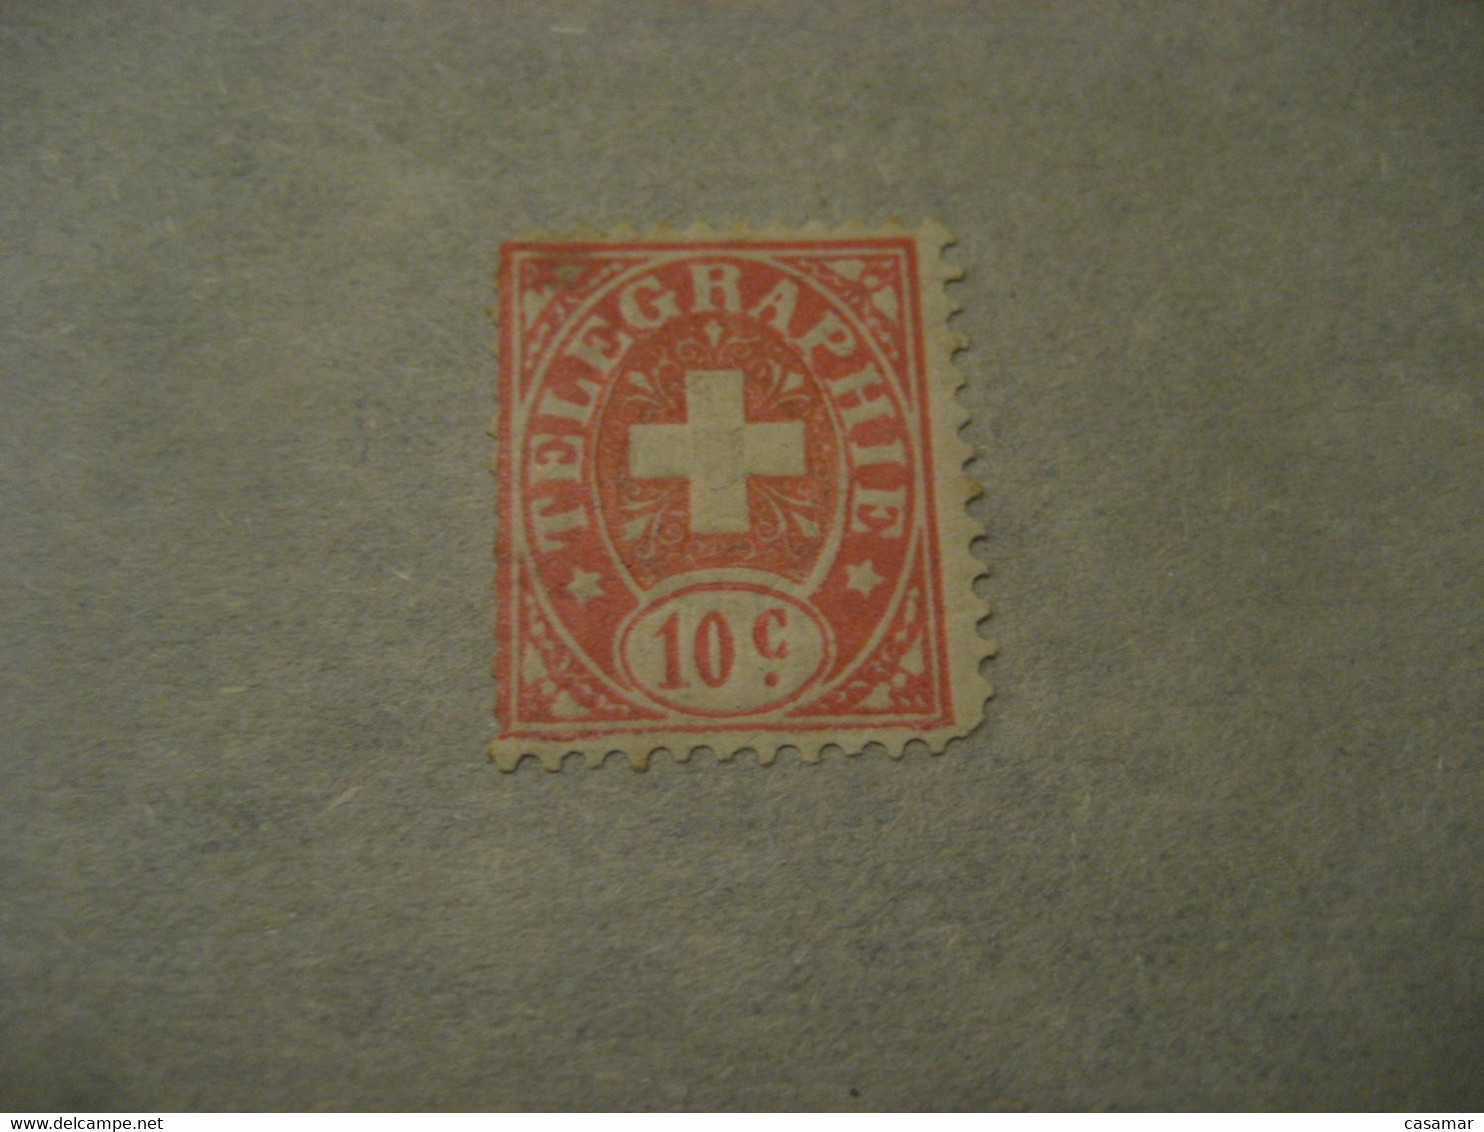 10c TELEGRAPHIE Telegraph SWITZERLAND Fiscal Revenue Suisse Slight Damaged - Telegraph